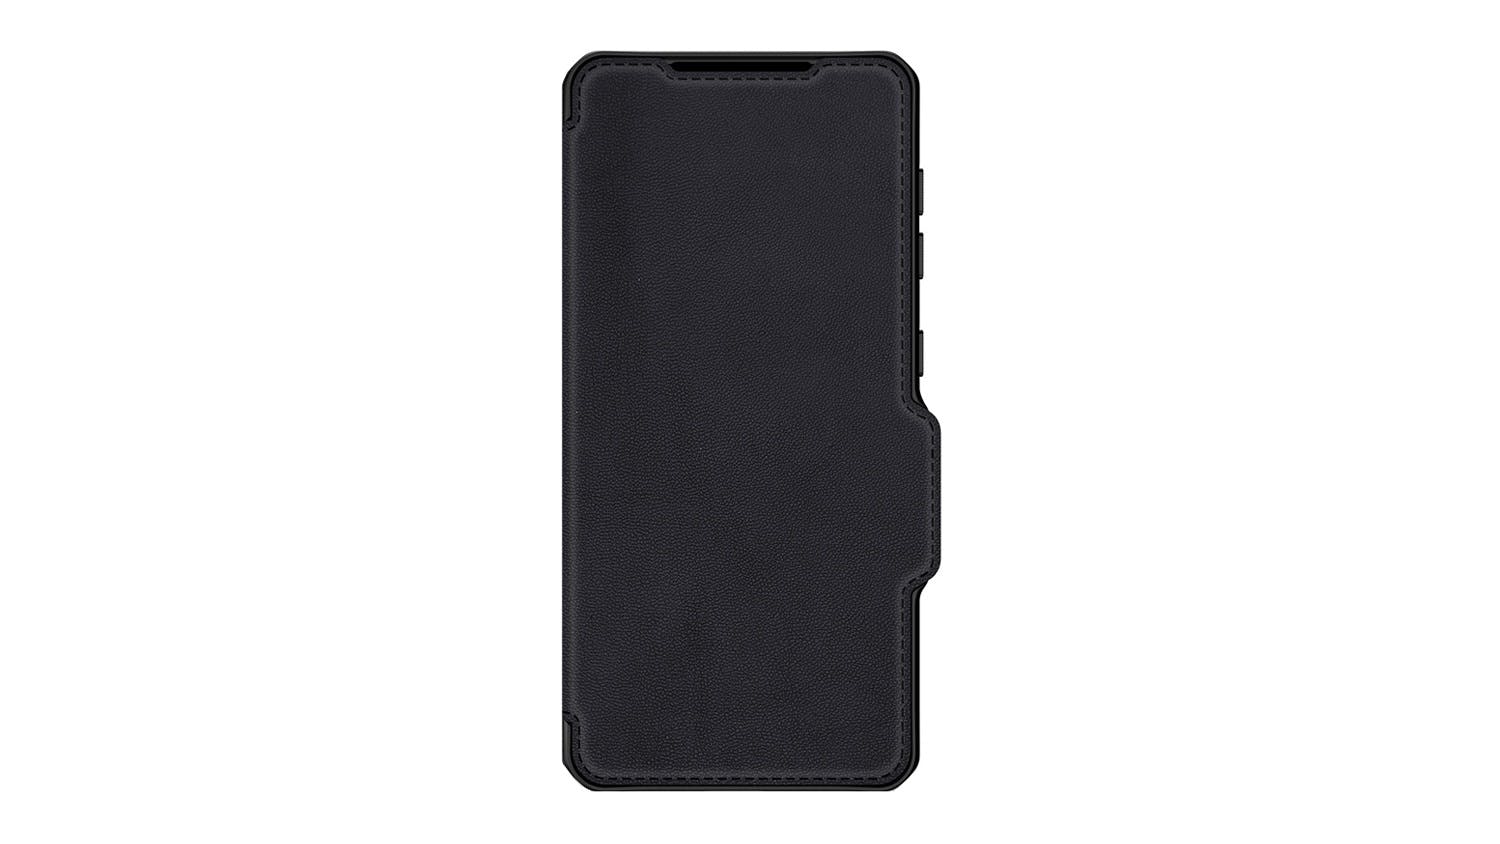 ITSKINS Hybrid Folio Leather Case for Samsung Galaxy S21+ - Black